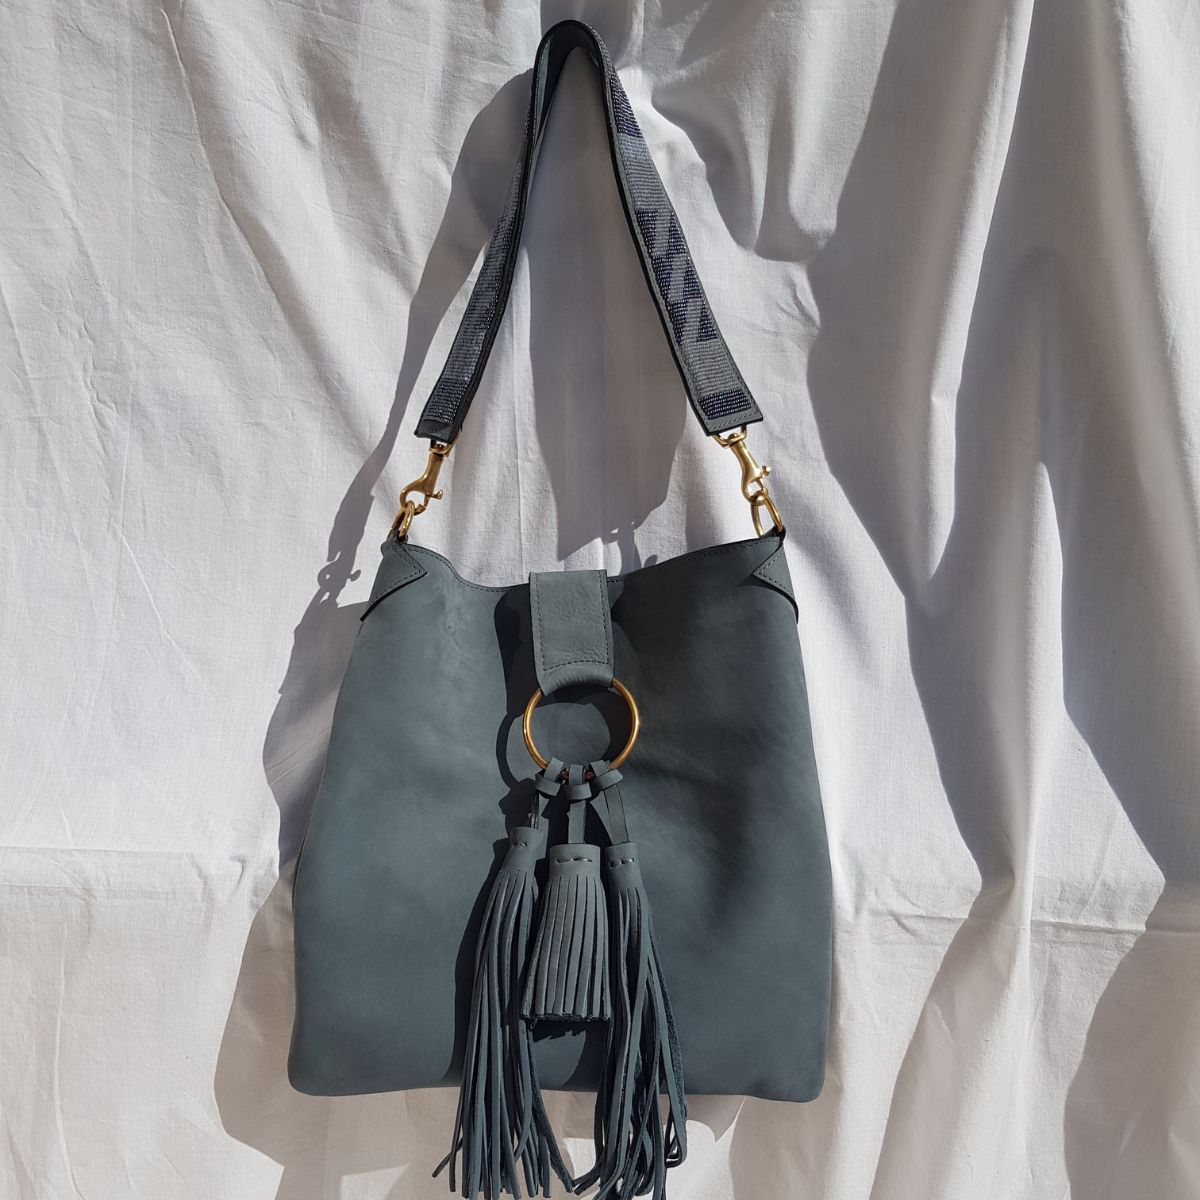 Is anyone buying Tods handbags anymore? : r/handbags